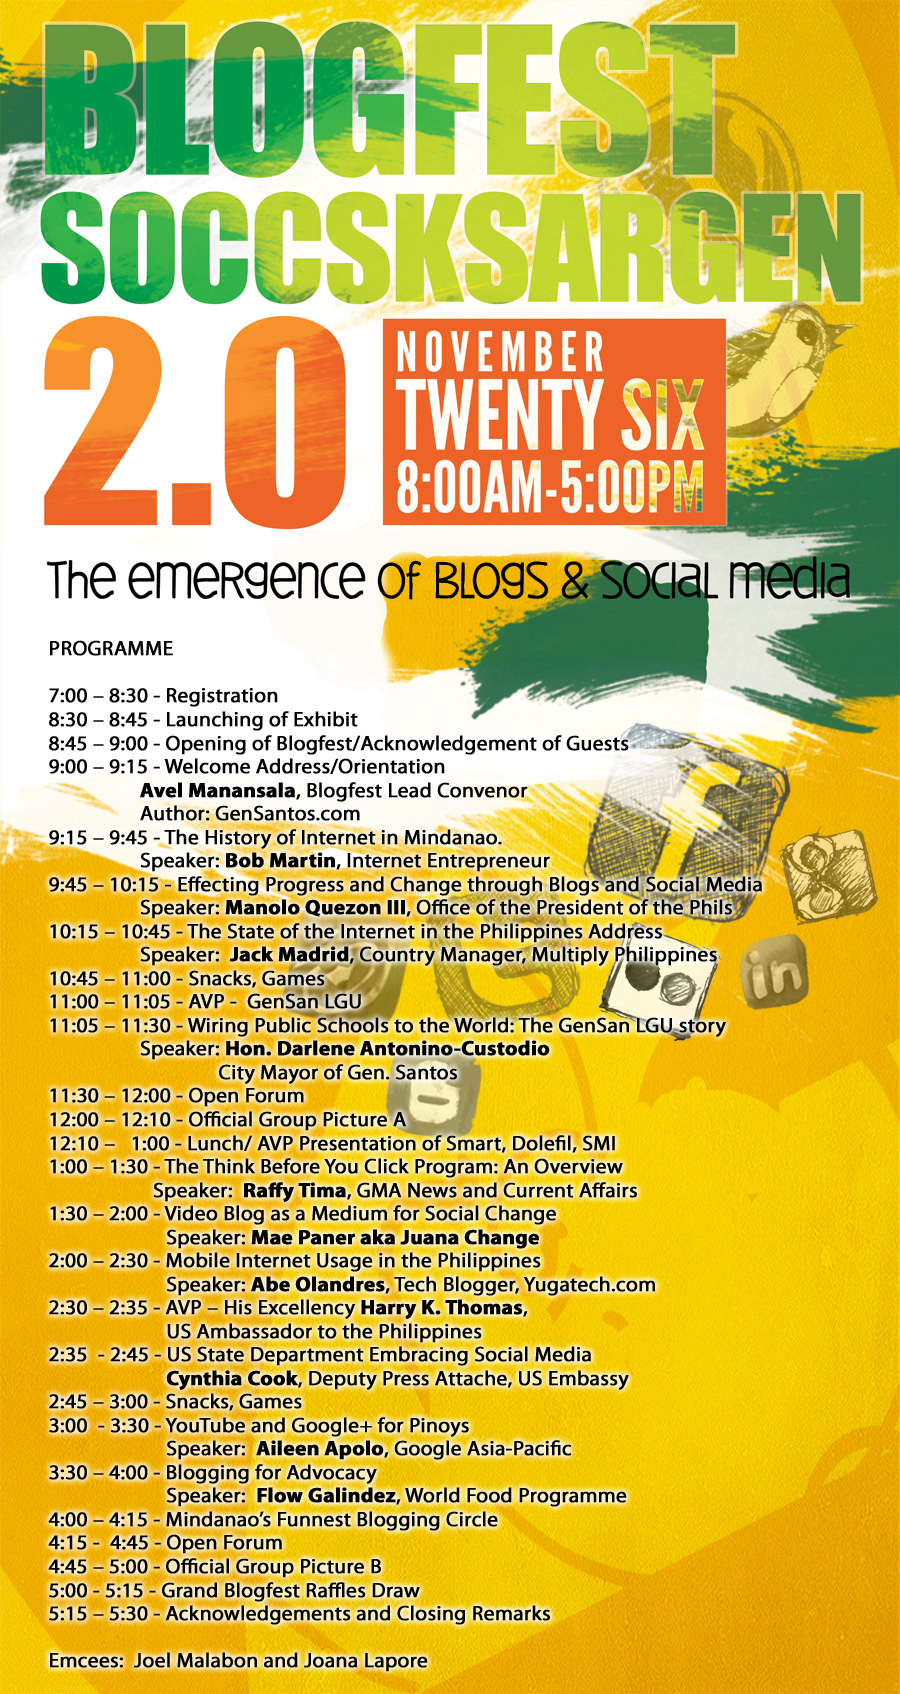 BlogFest 2.0 - Official Programme